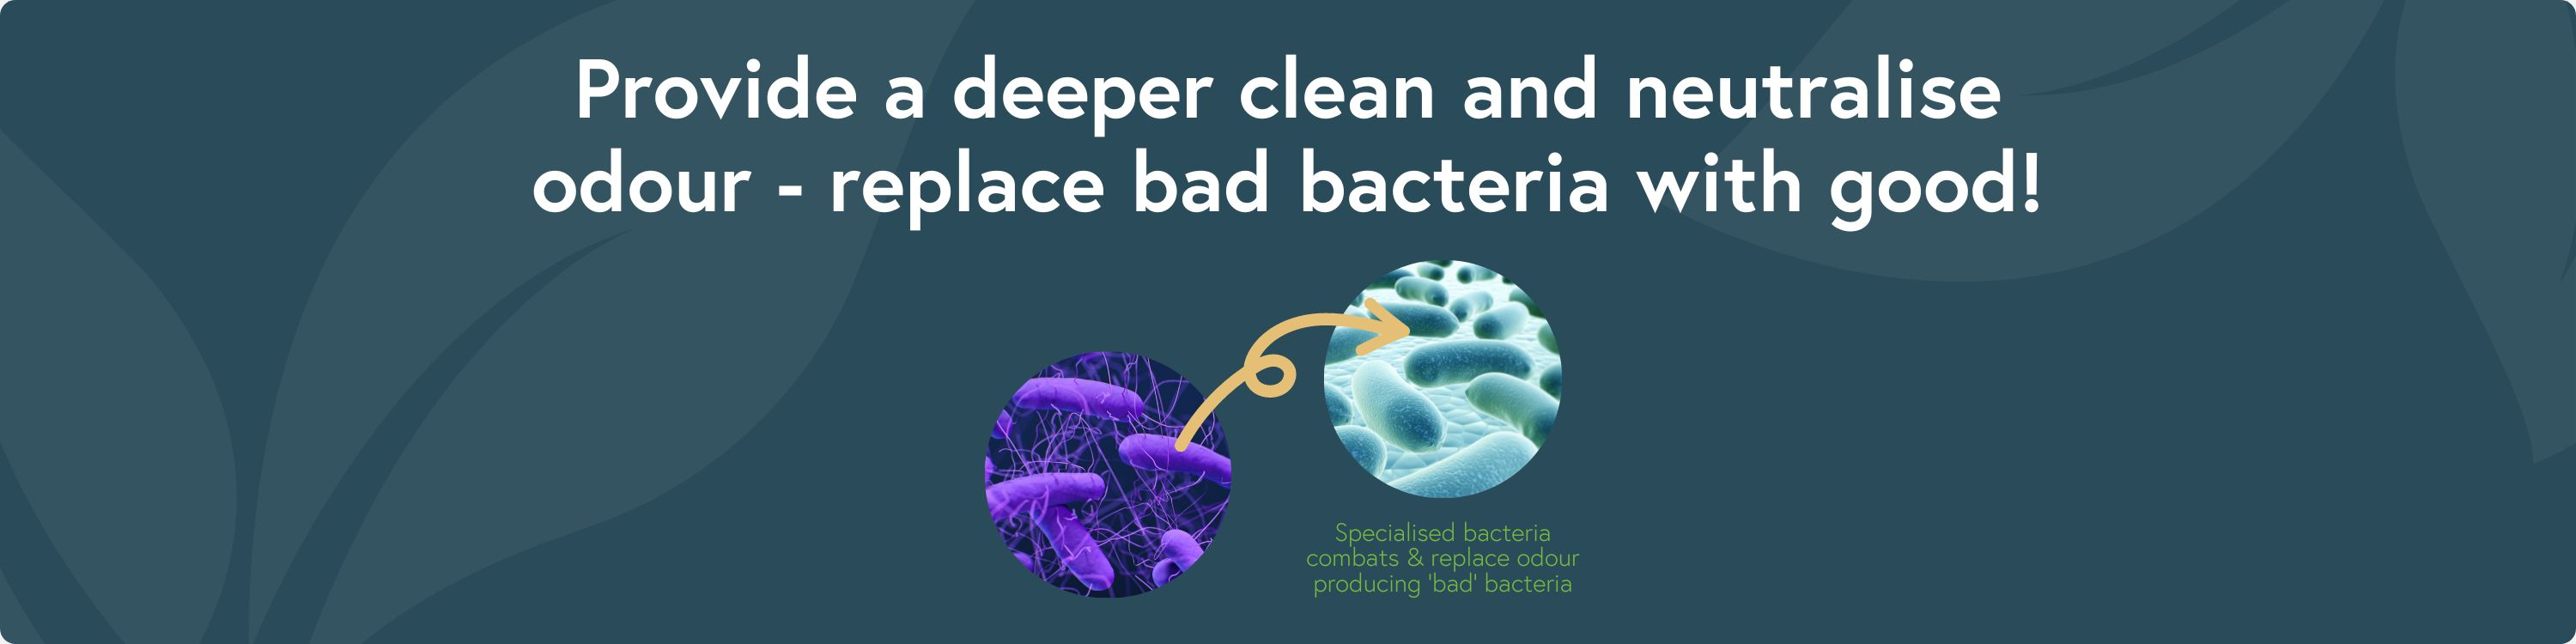 ntrl bacteria information